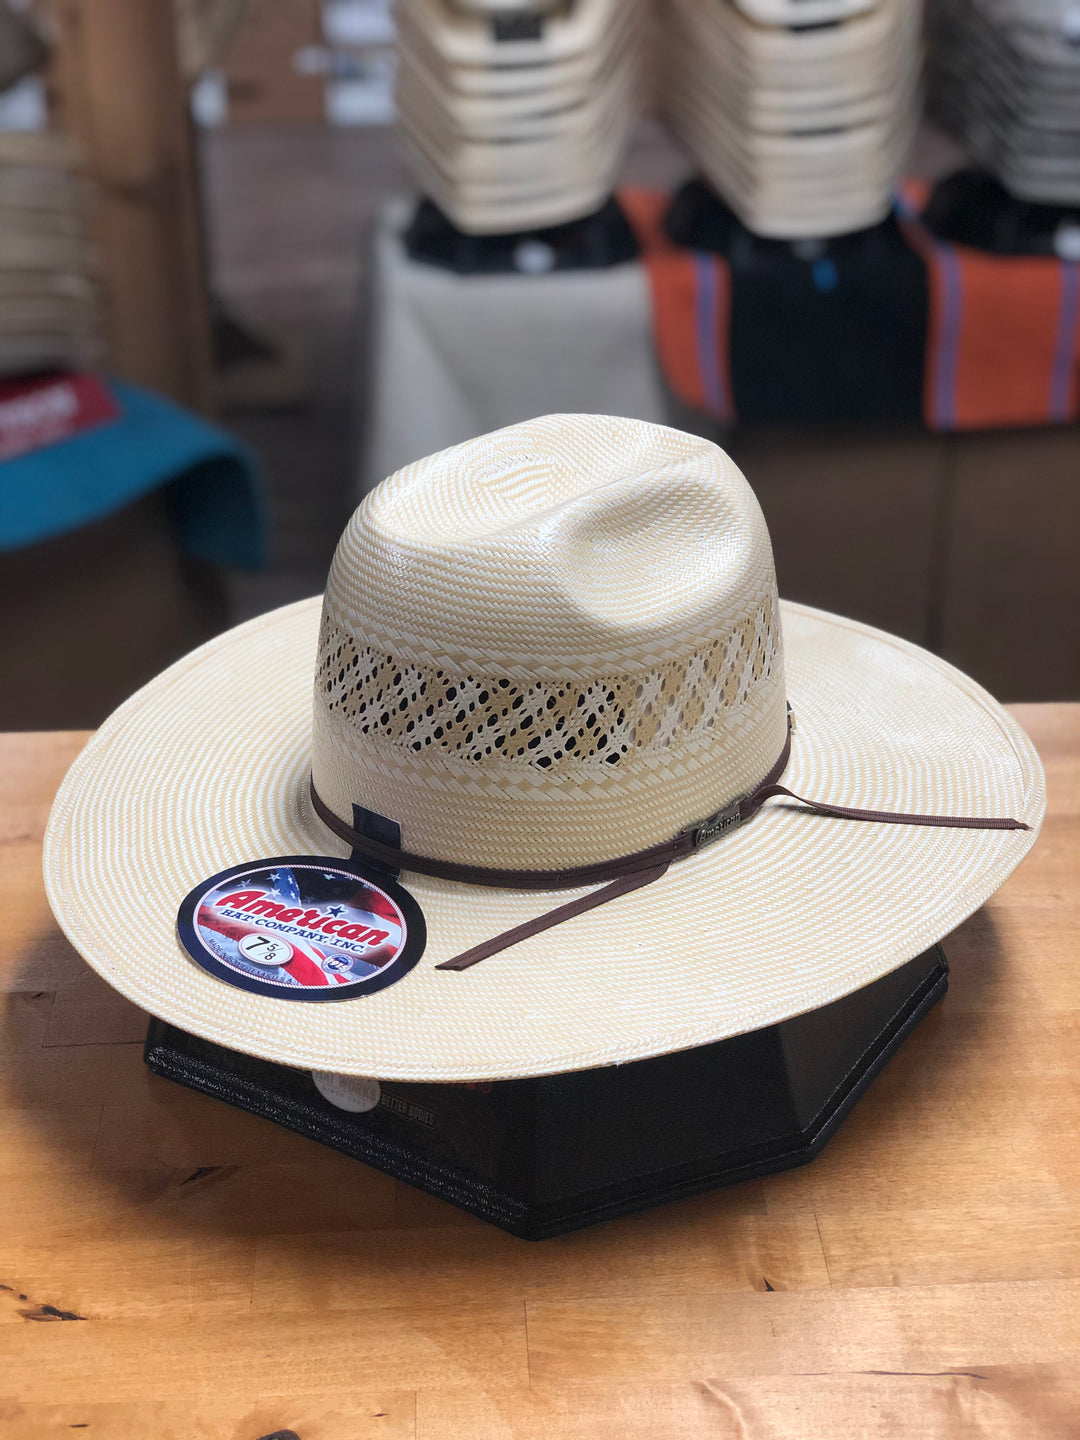 American Hat Company 1022 4 1/4" Straw Cowboy Hat